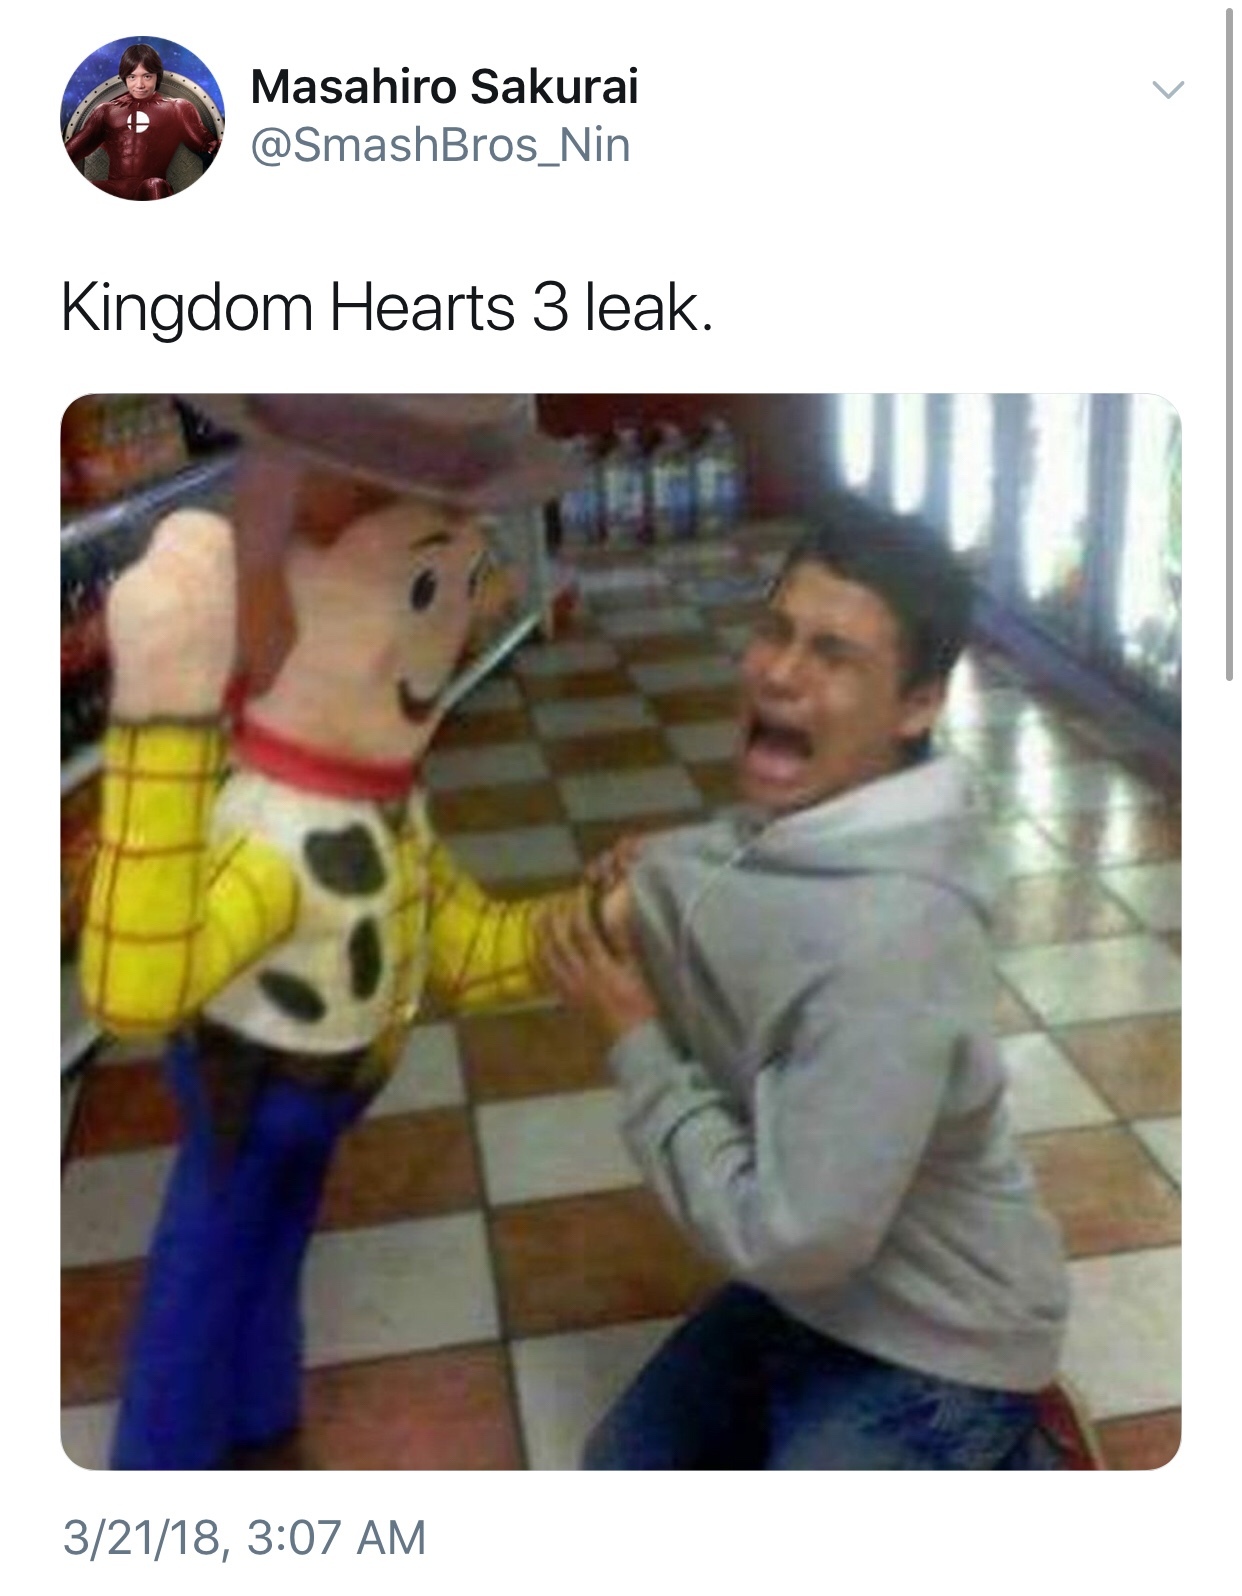 Kingdom Hearts 3 On Switch anyone? - meme